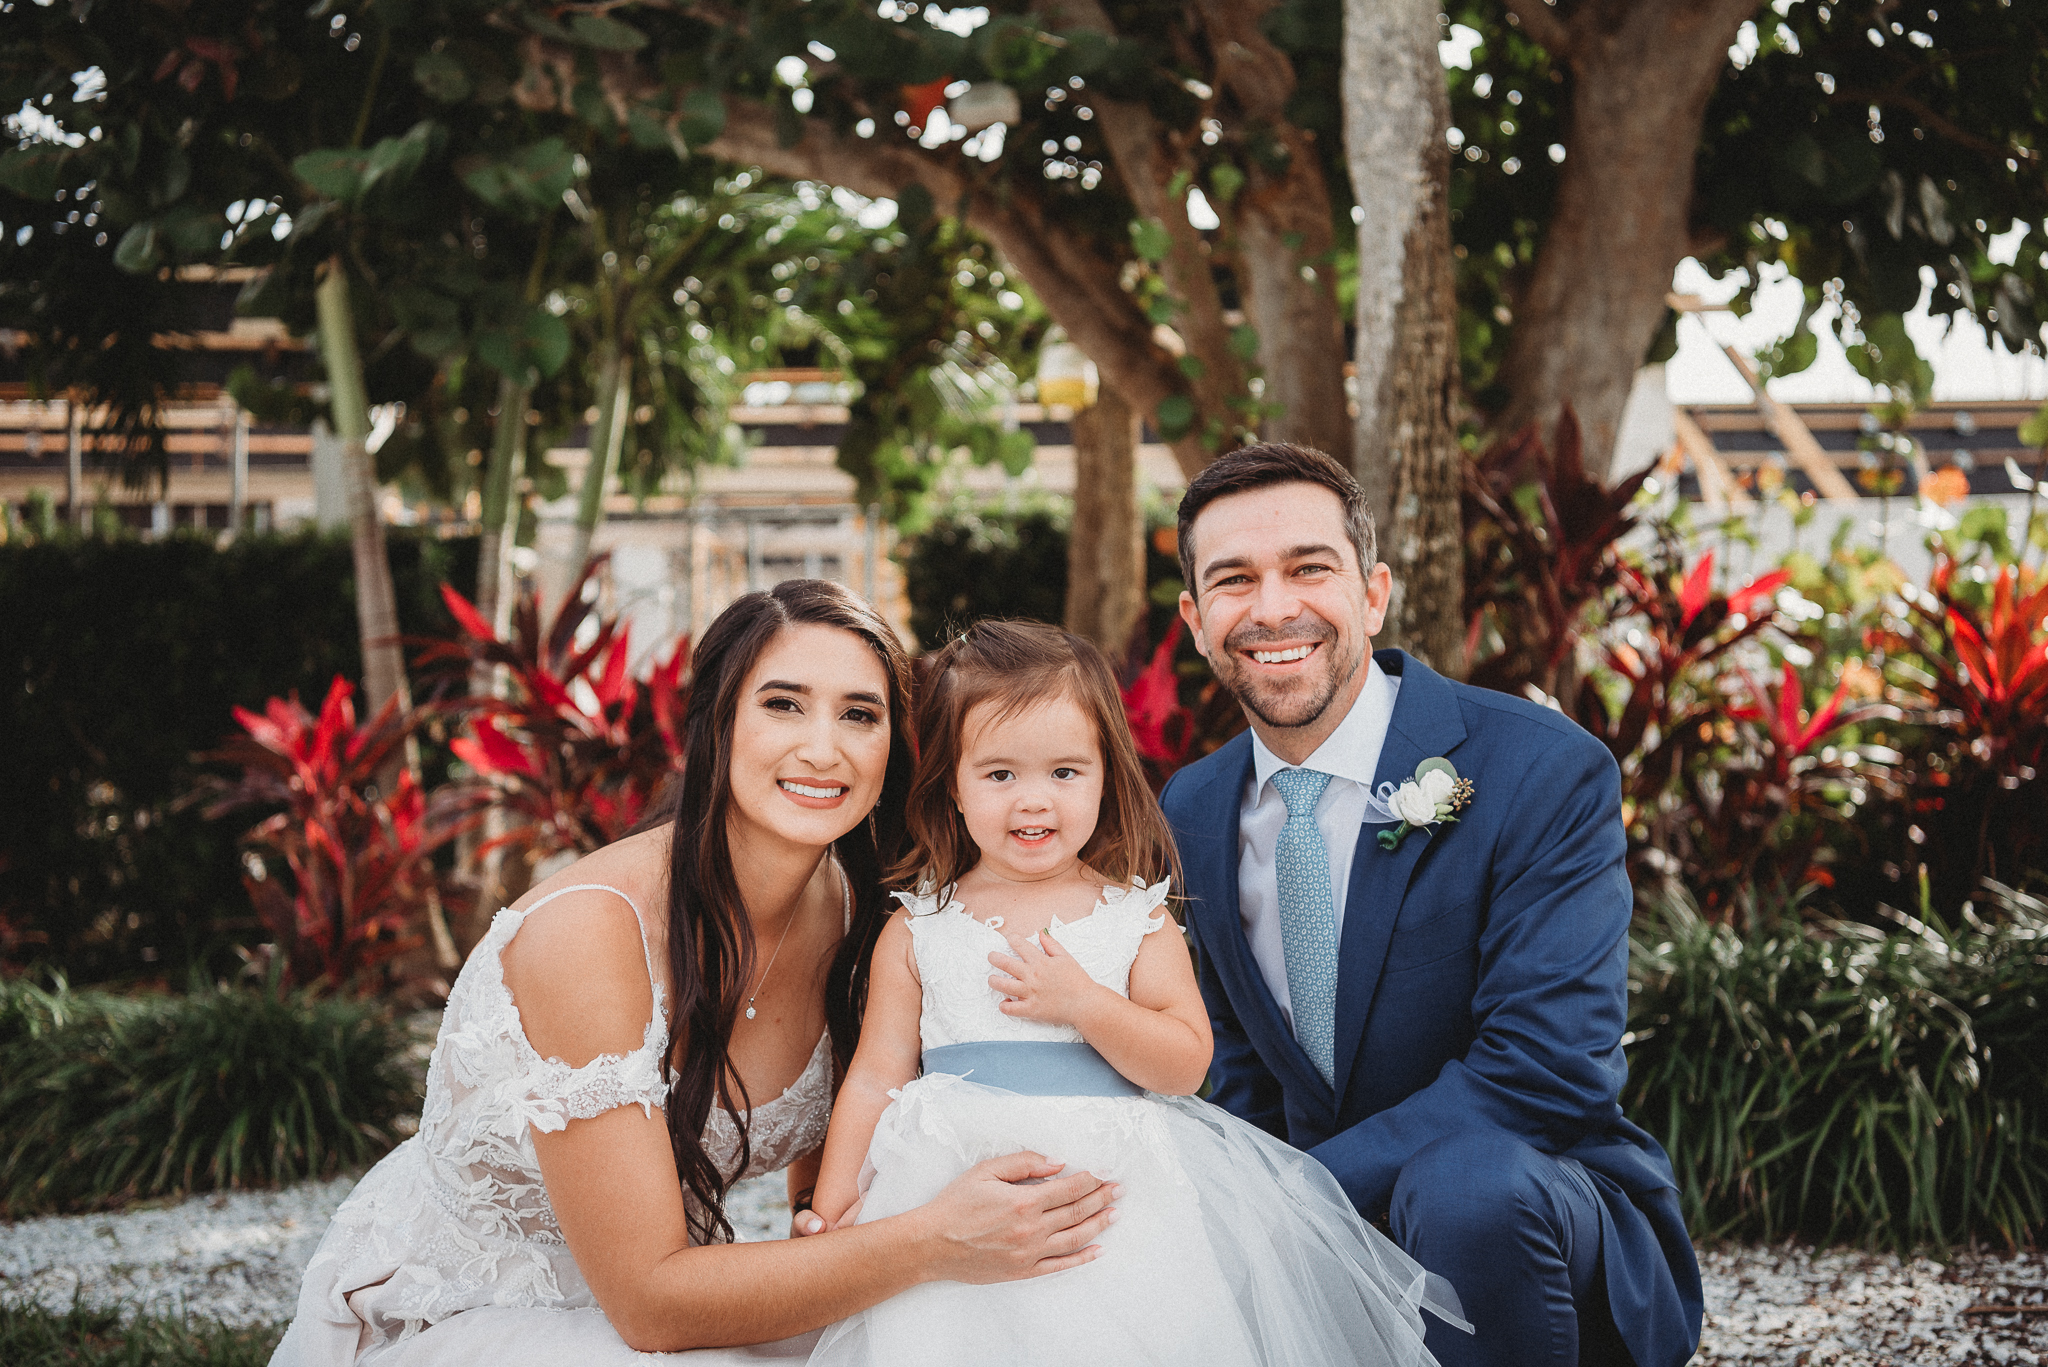 Caleo Photography, Florida Wedding Photographer, Brooksville, Florida Wedding Photographer, Second Shooter, Beach Wedding, Florida Wedding, Bride and Groom with Flower Girl